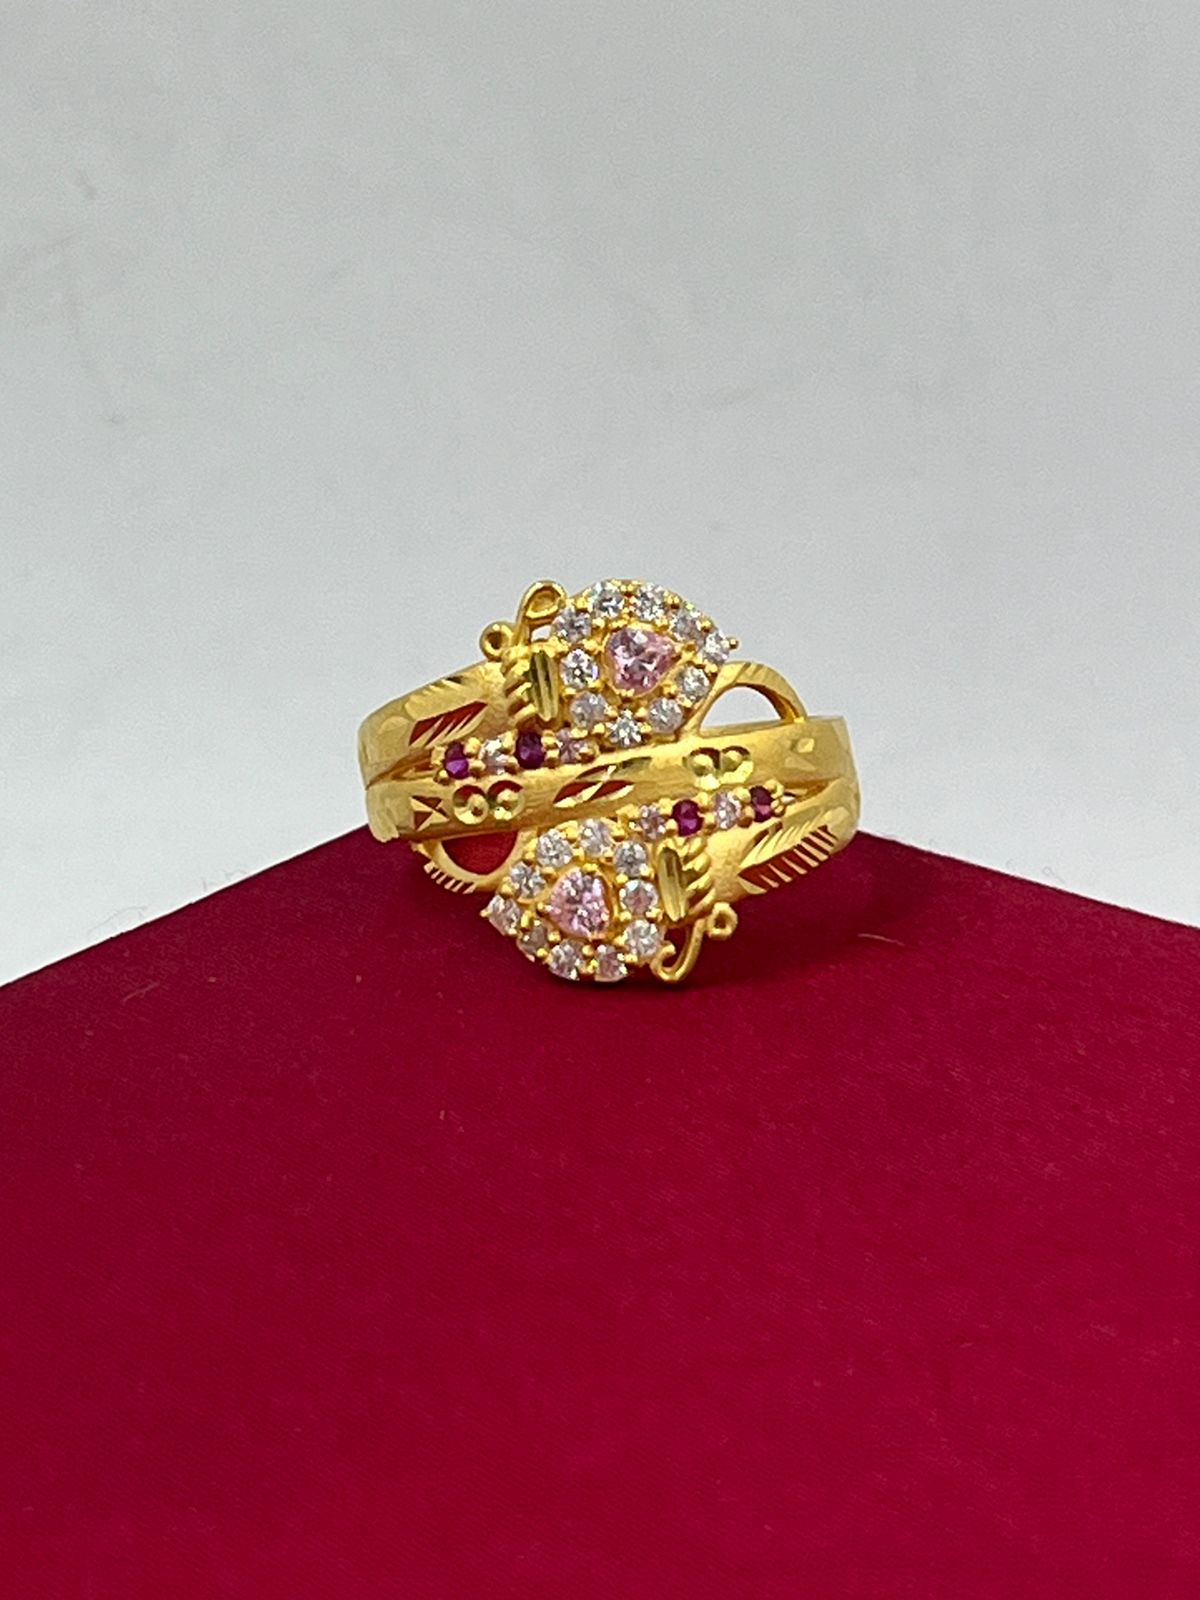 1 Gram Gold Plated Hand-crafted Delicate Design Ring For Men - Style B302,  सोने का पानी चढ़ी हुई अंगूठी - Soni Fashion, Rajkot | ID: 2851380073273